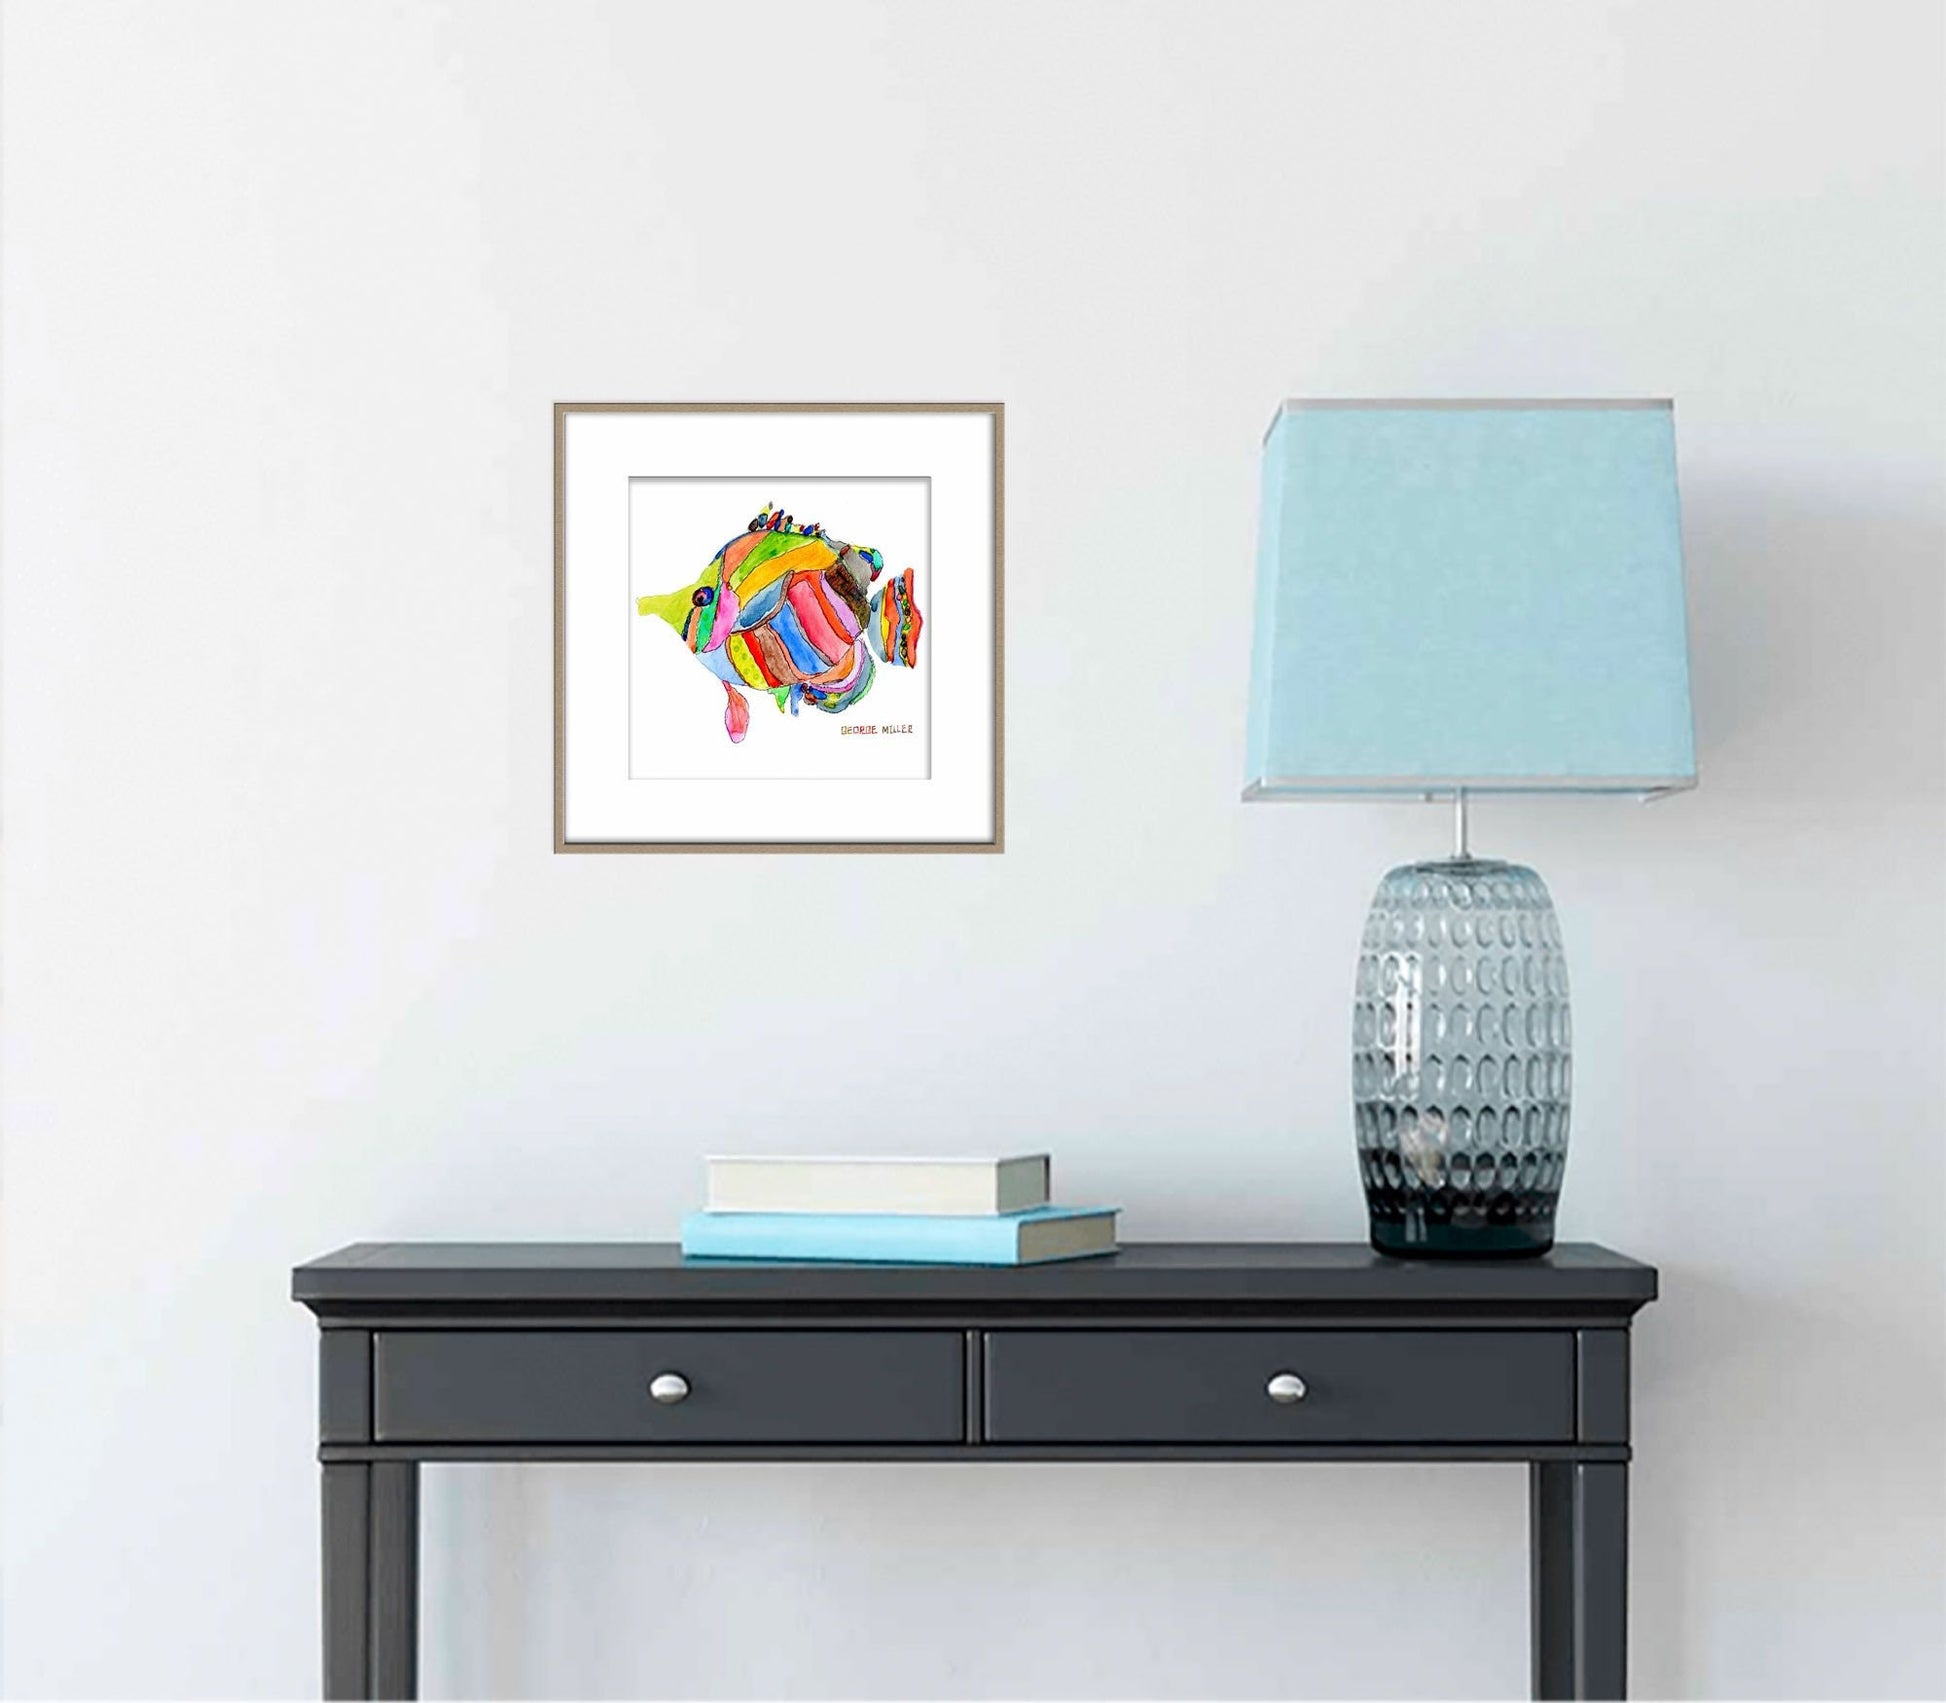 Giclée Print Tropical Fish, Print Art, Watercolor Print, Wall Decor Bedroom, Abstract Print, Art, Artwork, Modern Art, Kitchen Décor